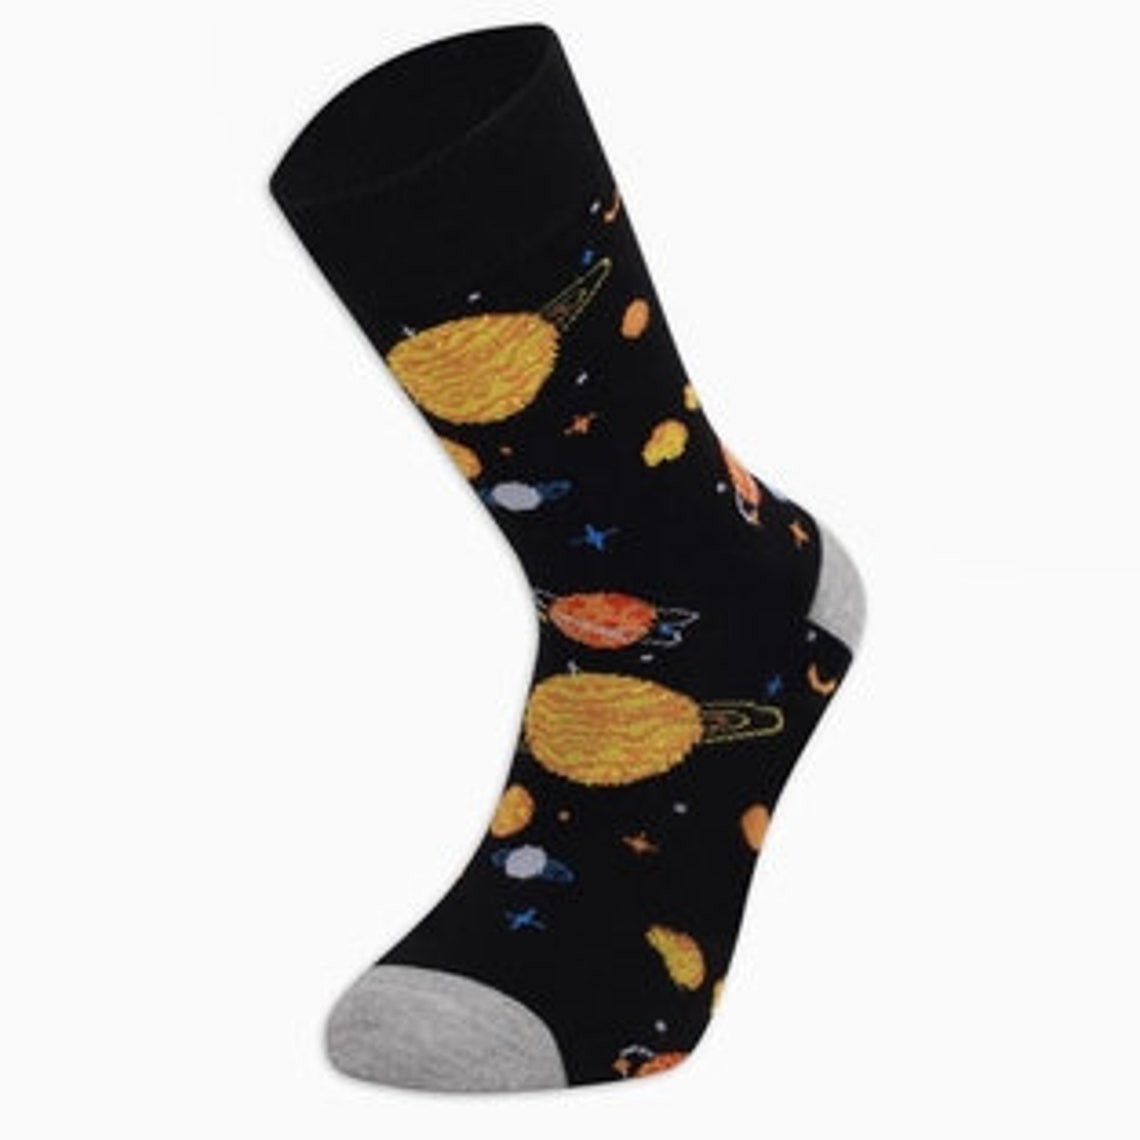 Space Socks Planet Socks NASA Socks Colorful Socks Galaxy | Etsy